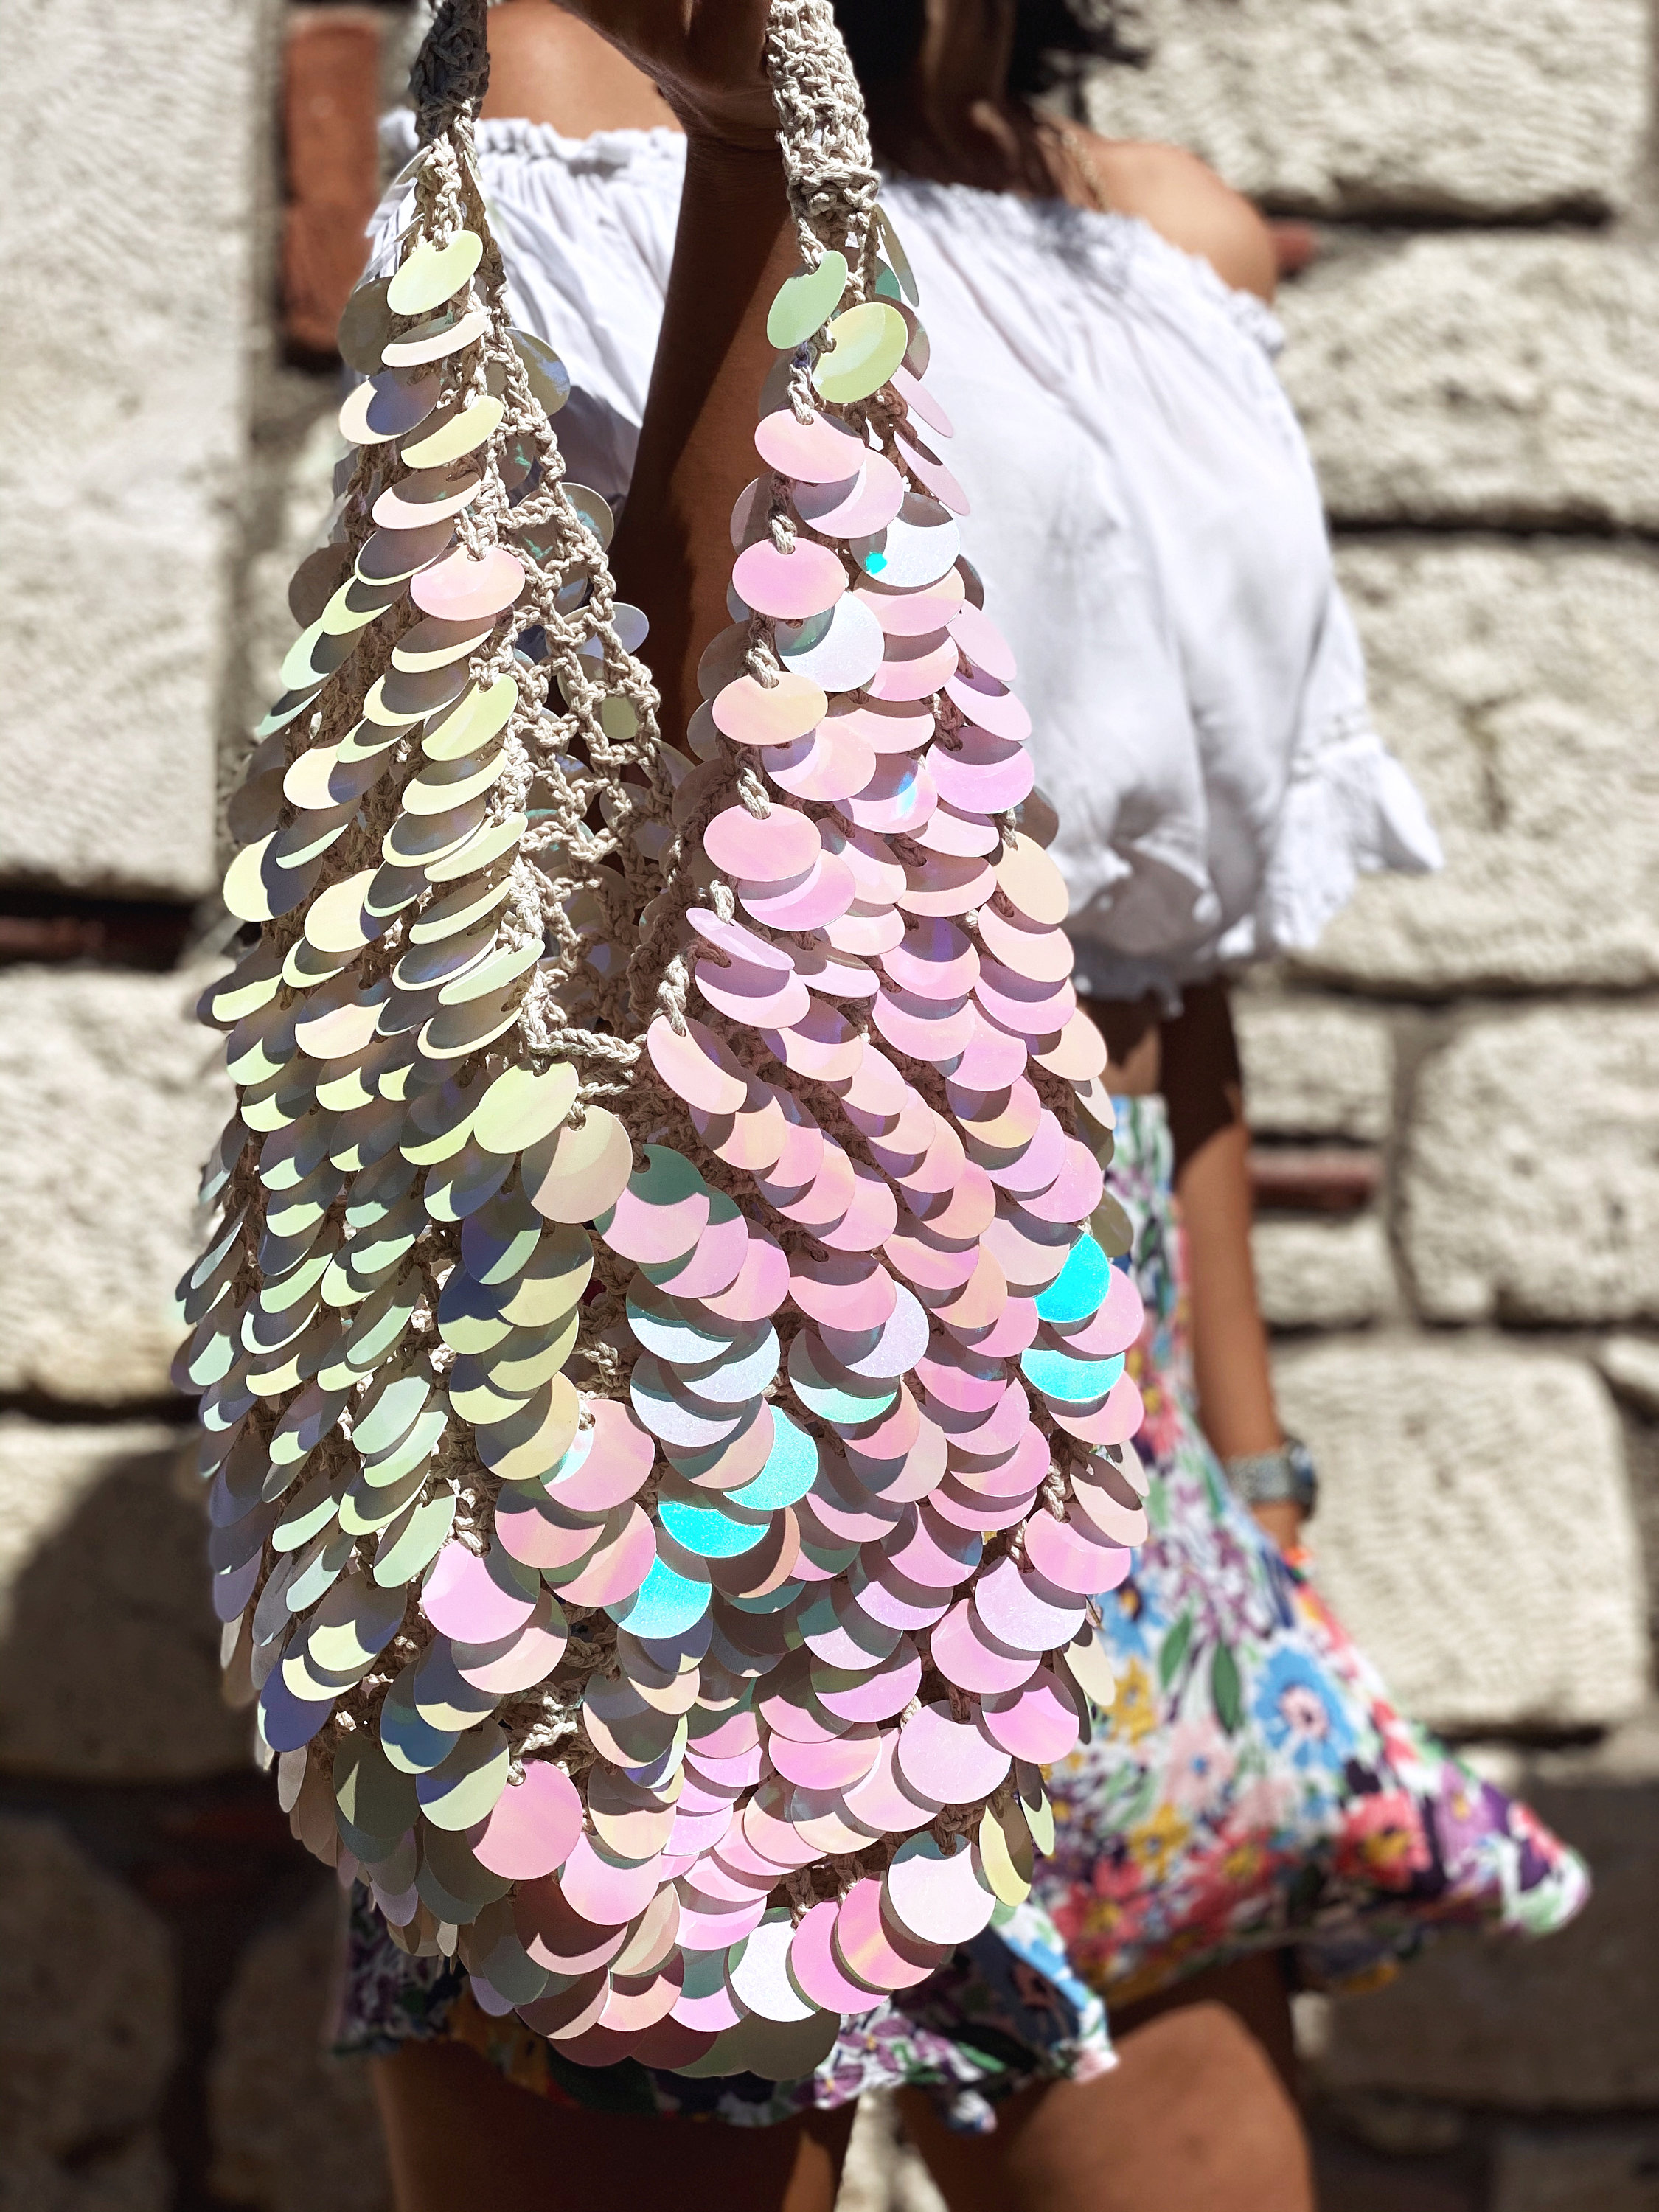 Hosby Women's Sparkling Bag Charm